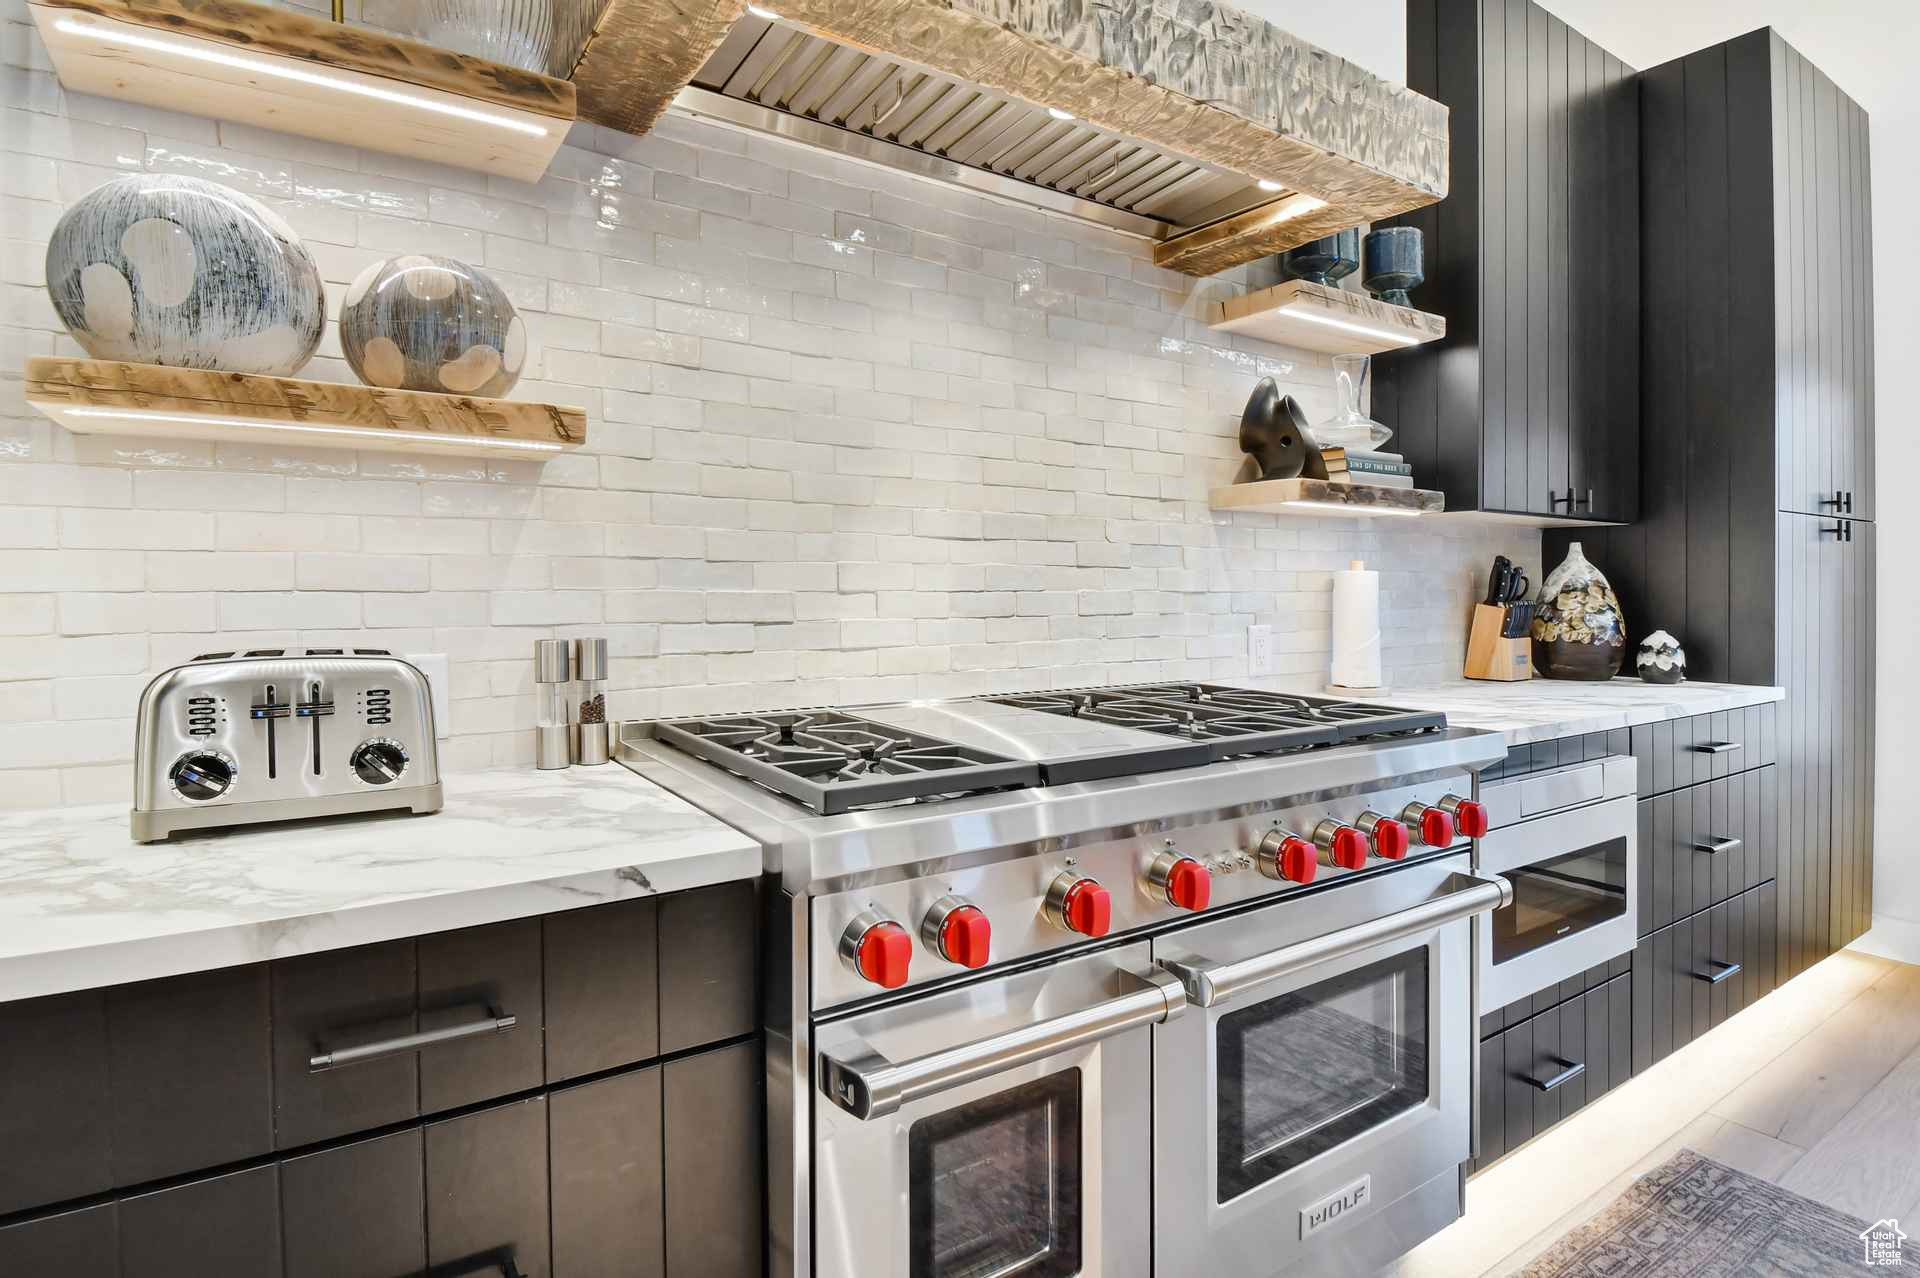 Kitchen with backsplash, double oven range, hardwood / wood-style floors, and light stone countertops